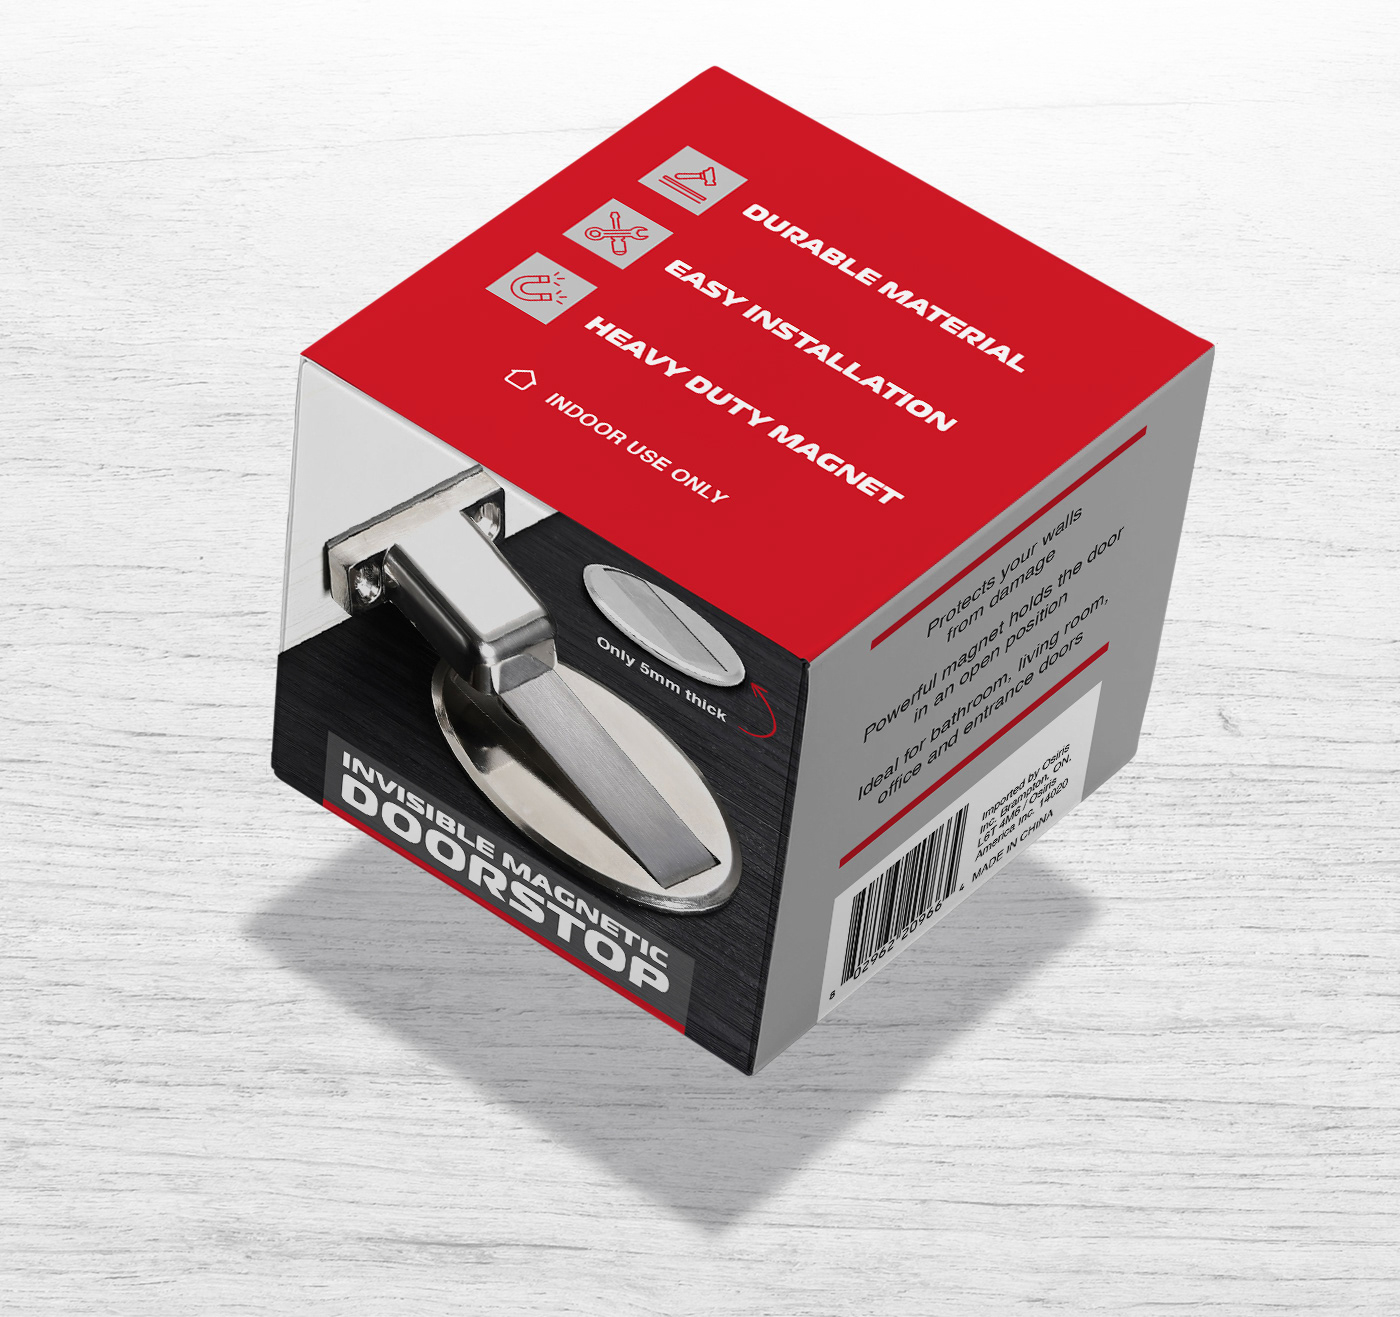 Packaging packaging design visual identity package product box design product packaging package design 